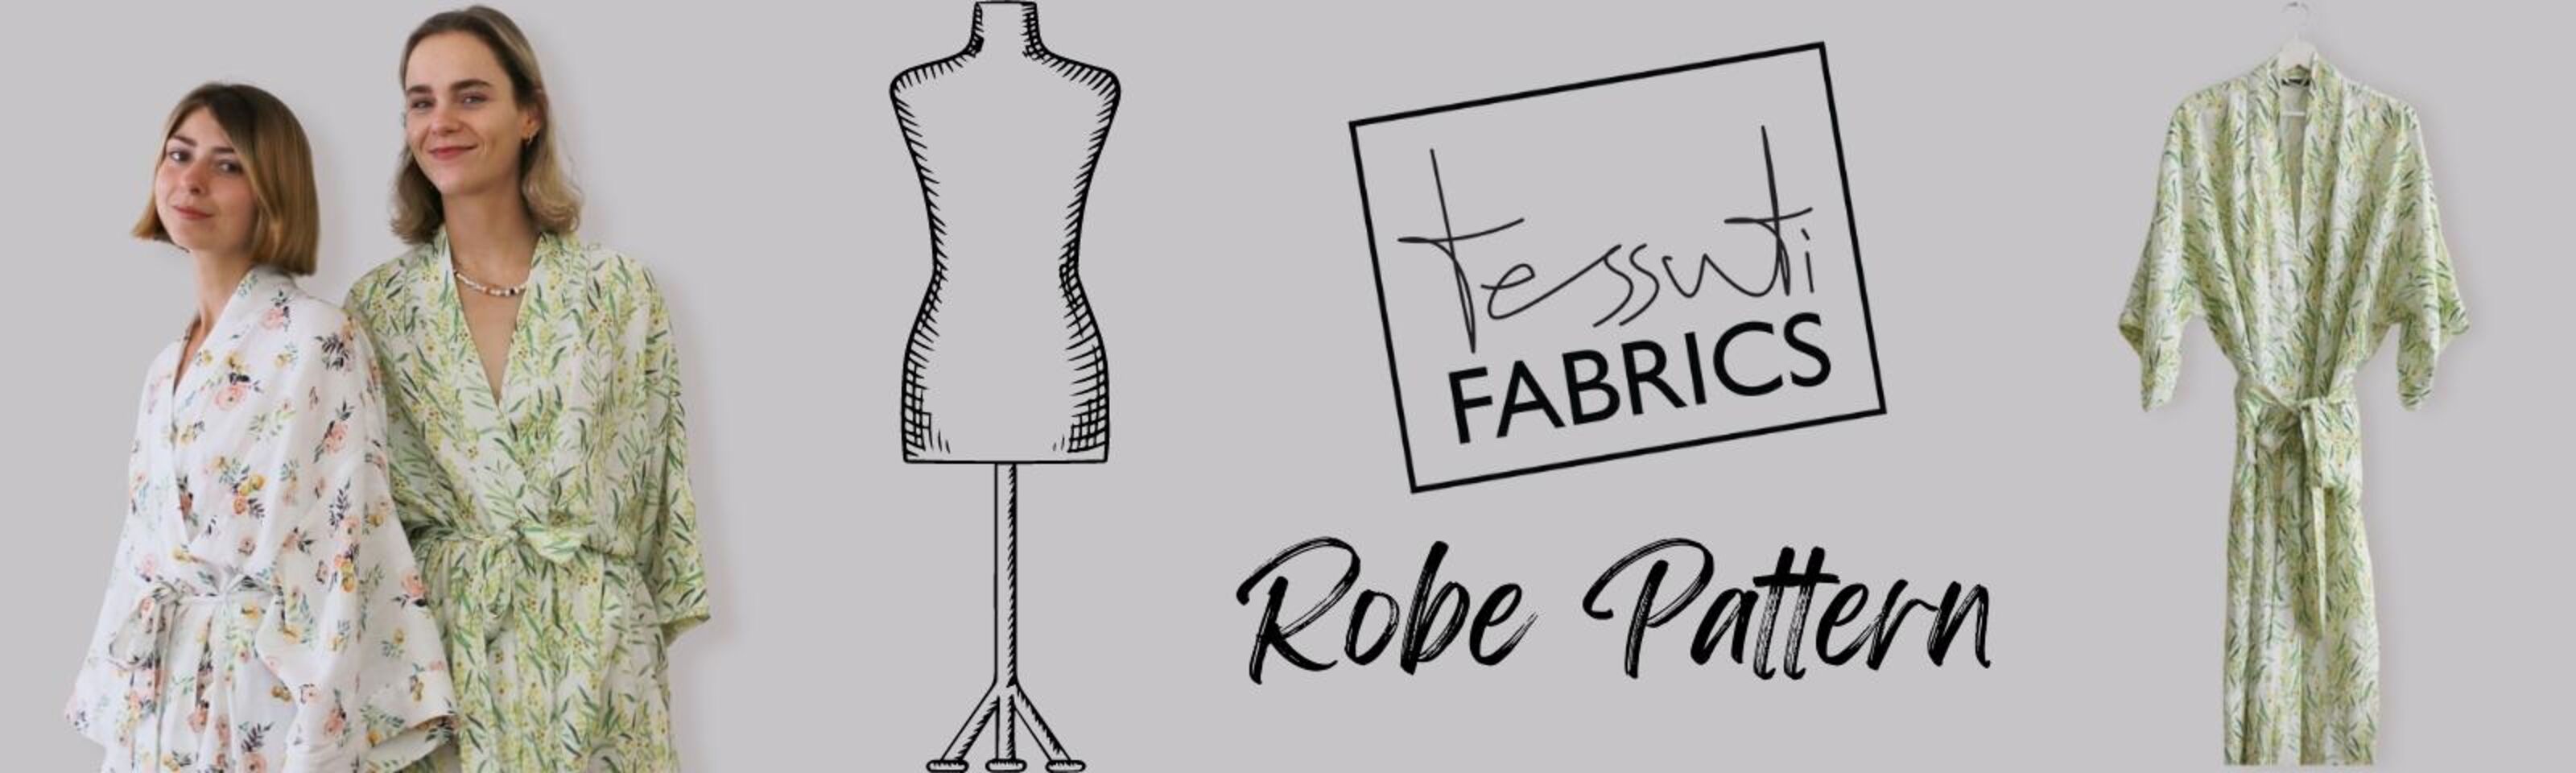 PDF Sewing Pattern: Men's Dressing Gown Robe - Luxurious DIY Gift